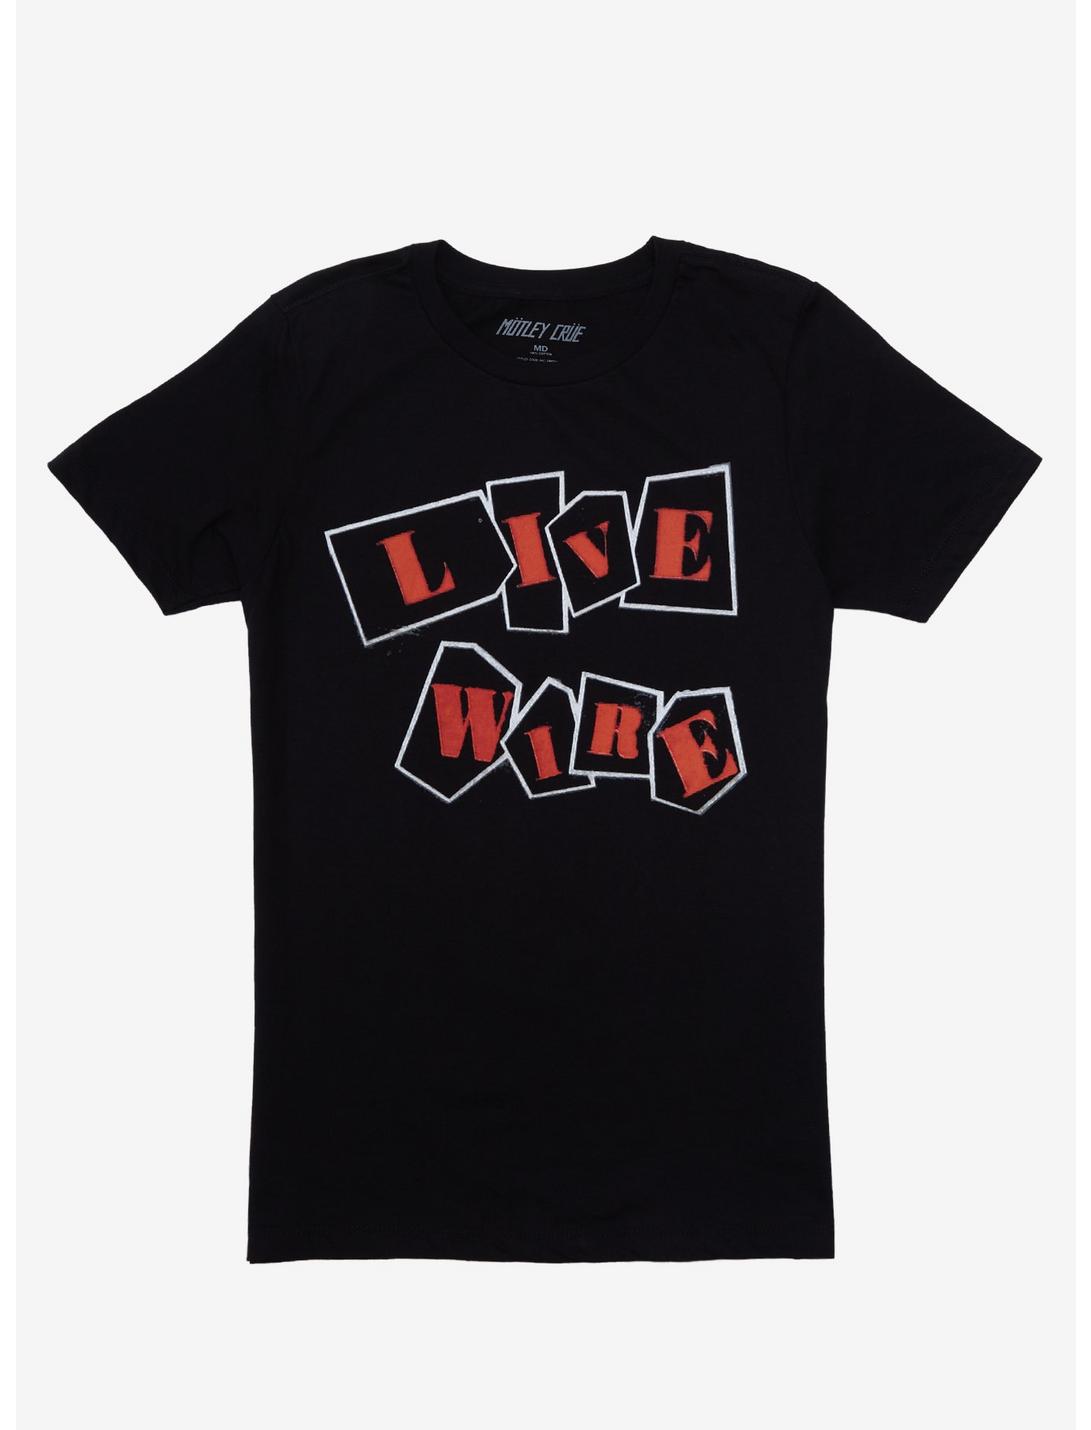 Motley Crue Live Wire Girls T-Shirt